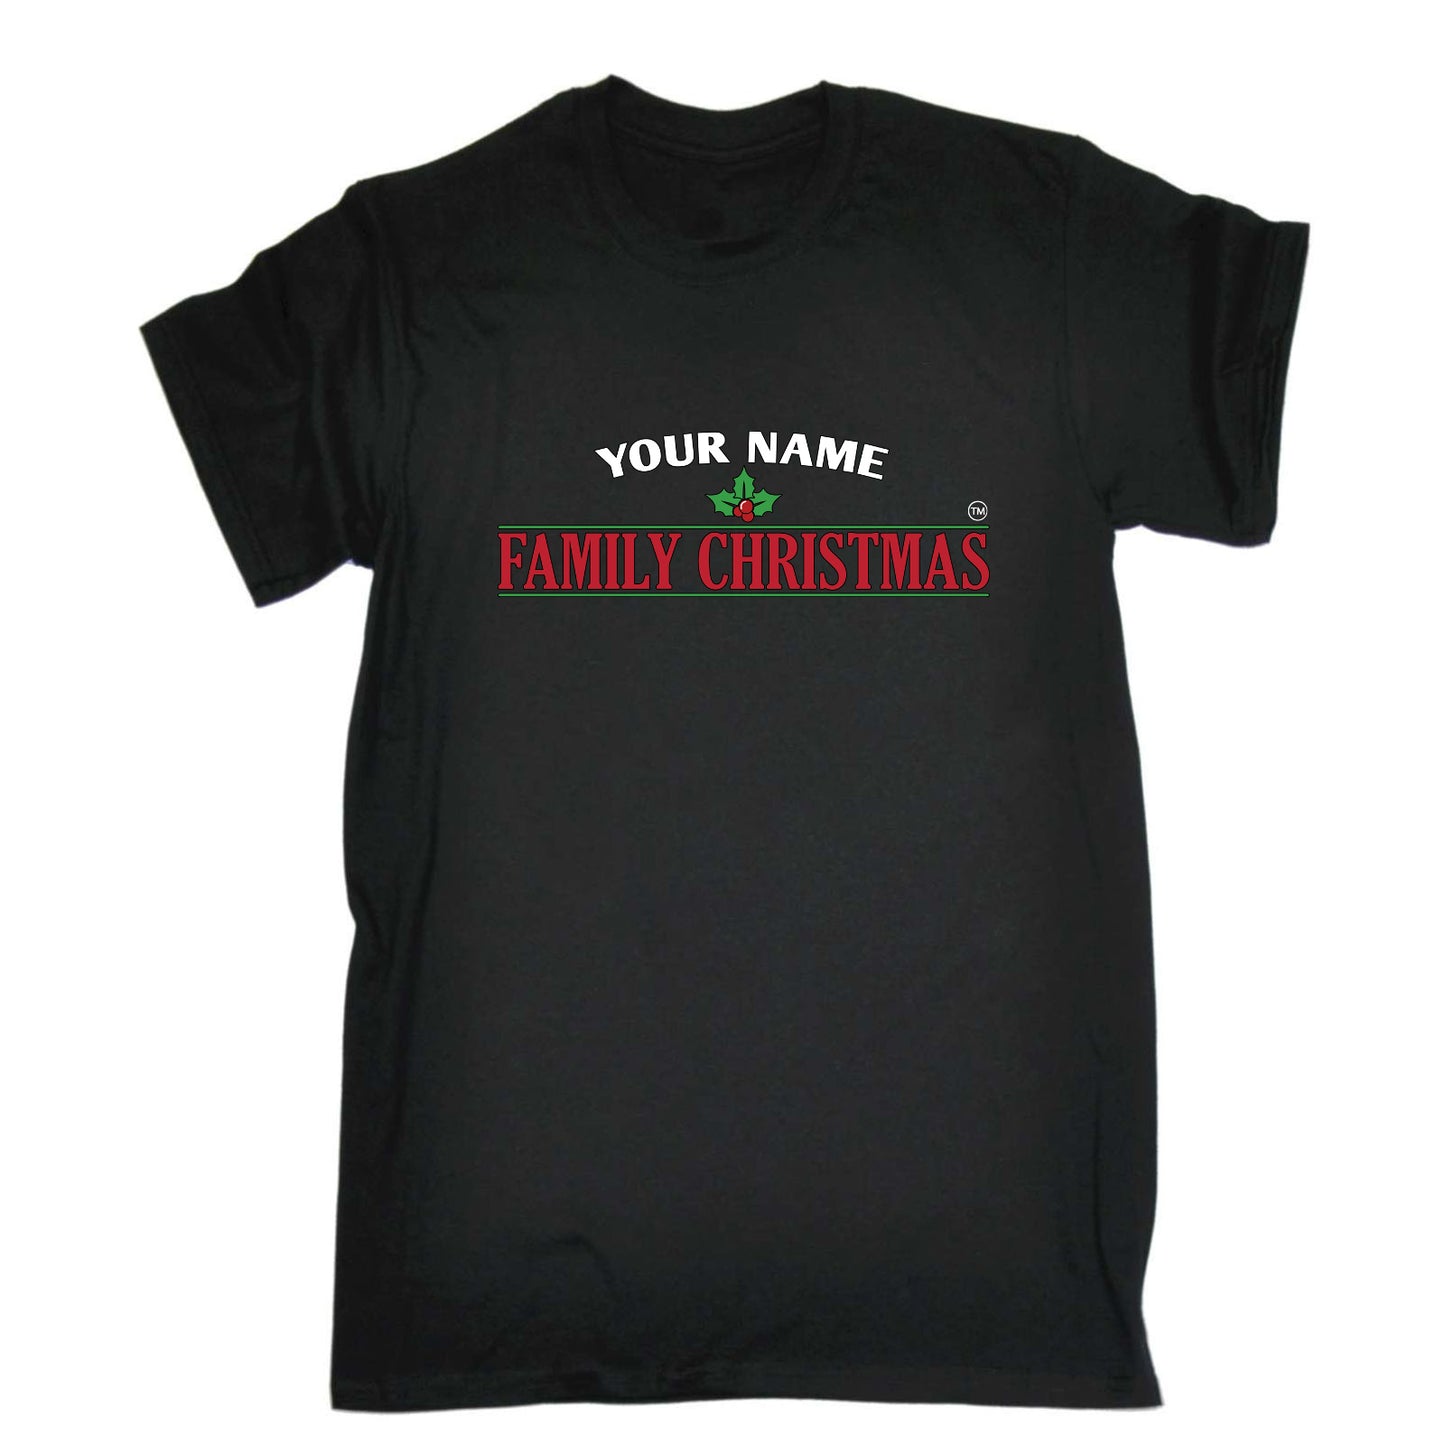 Family Christmas V5 Holly Banner - Mens Funny T-Shirt Tshirts